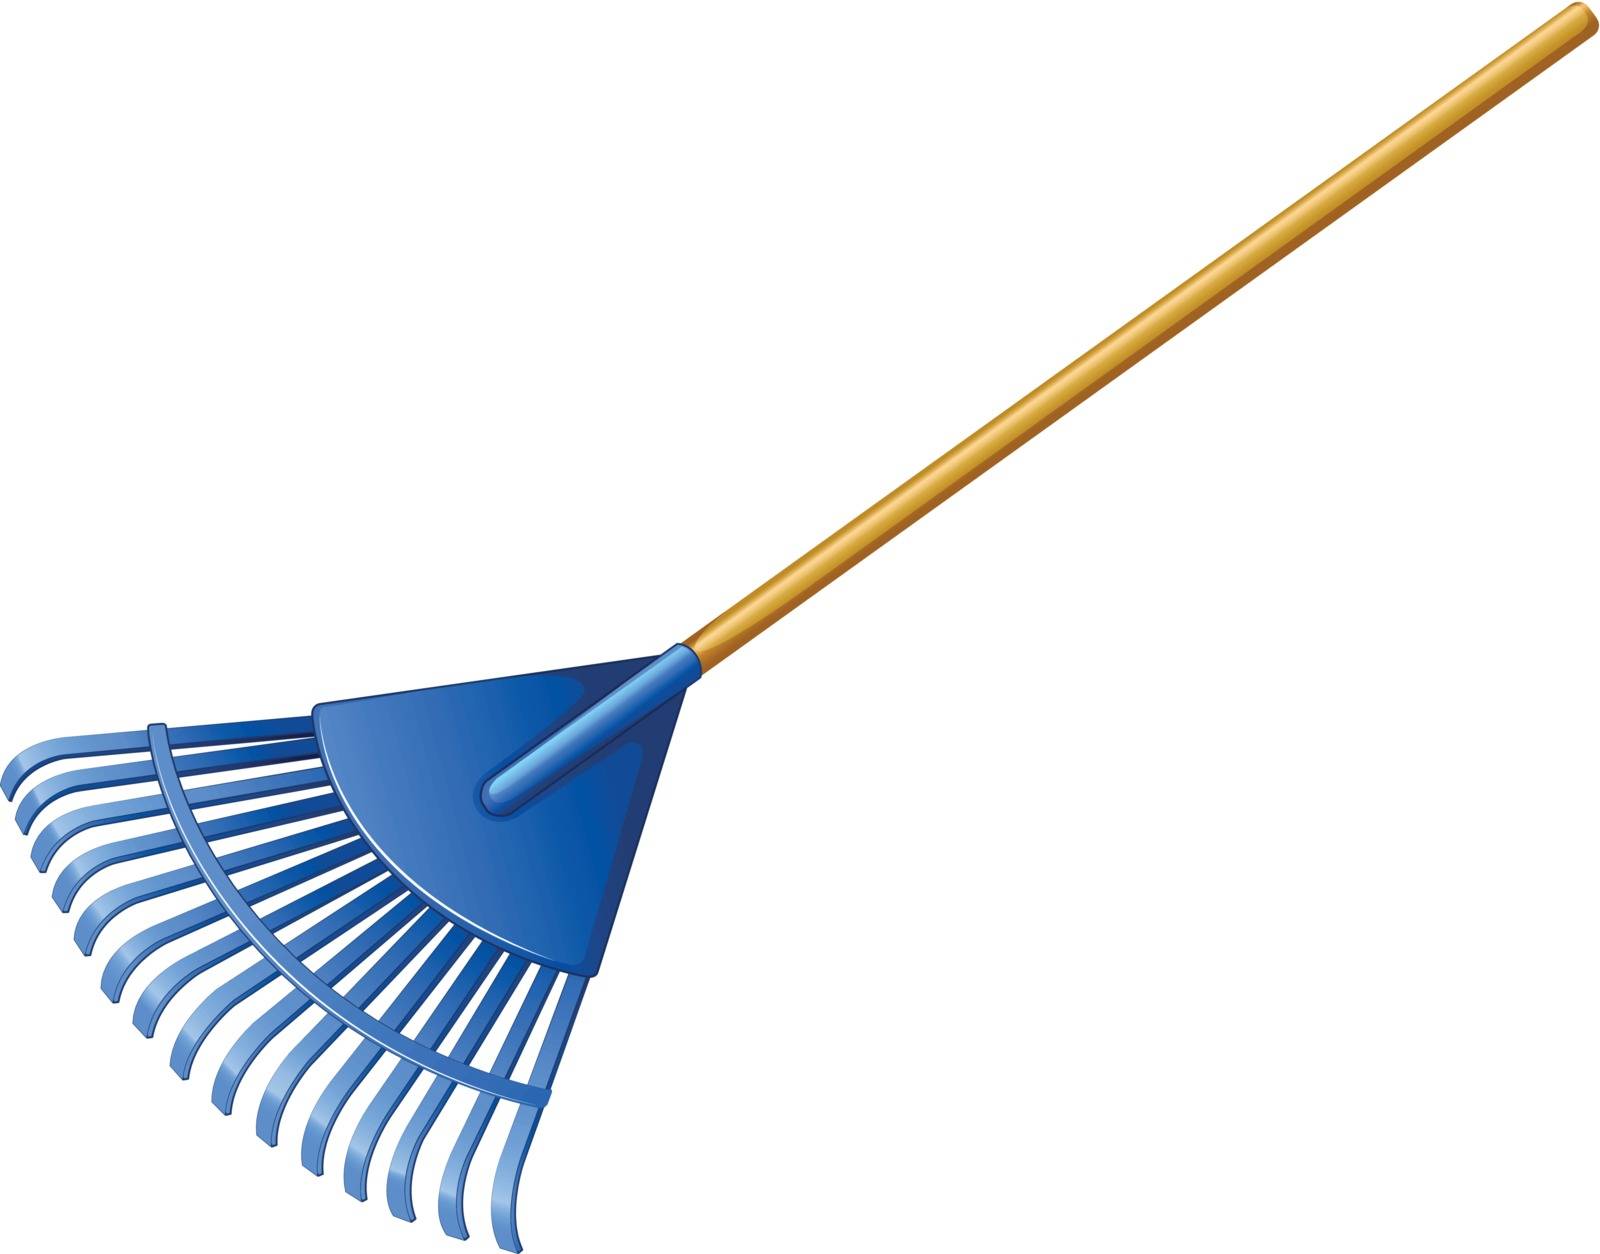 Illustration of a blue rake on a white background